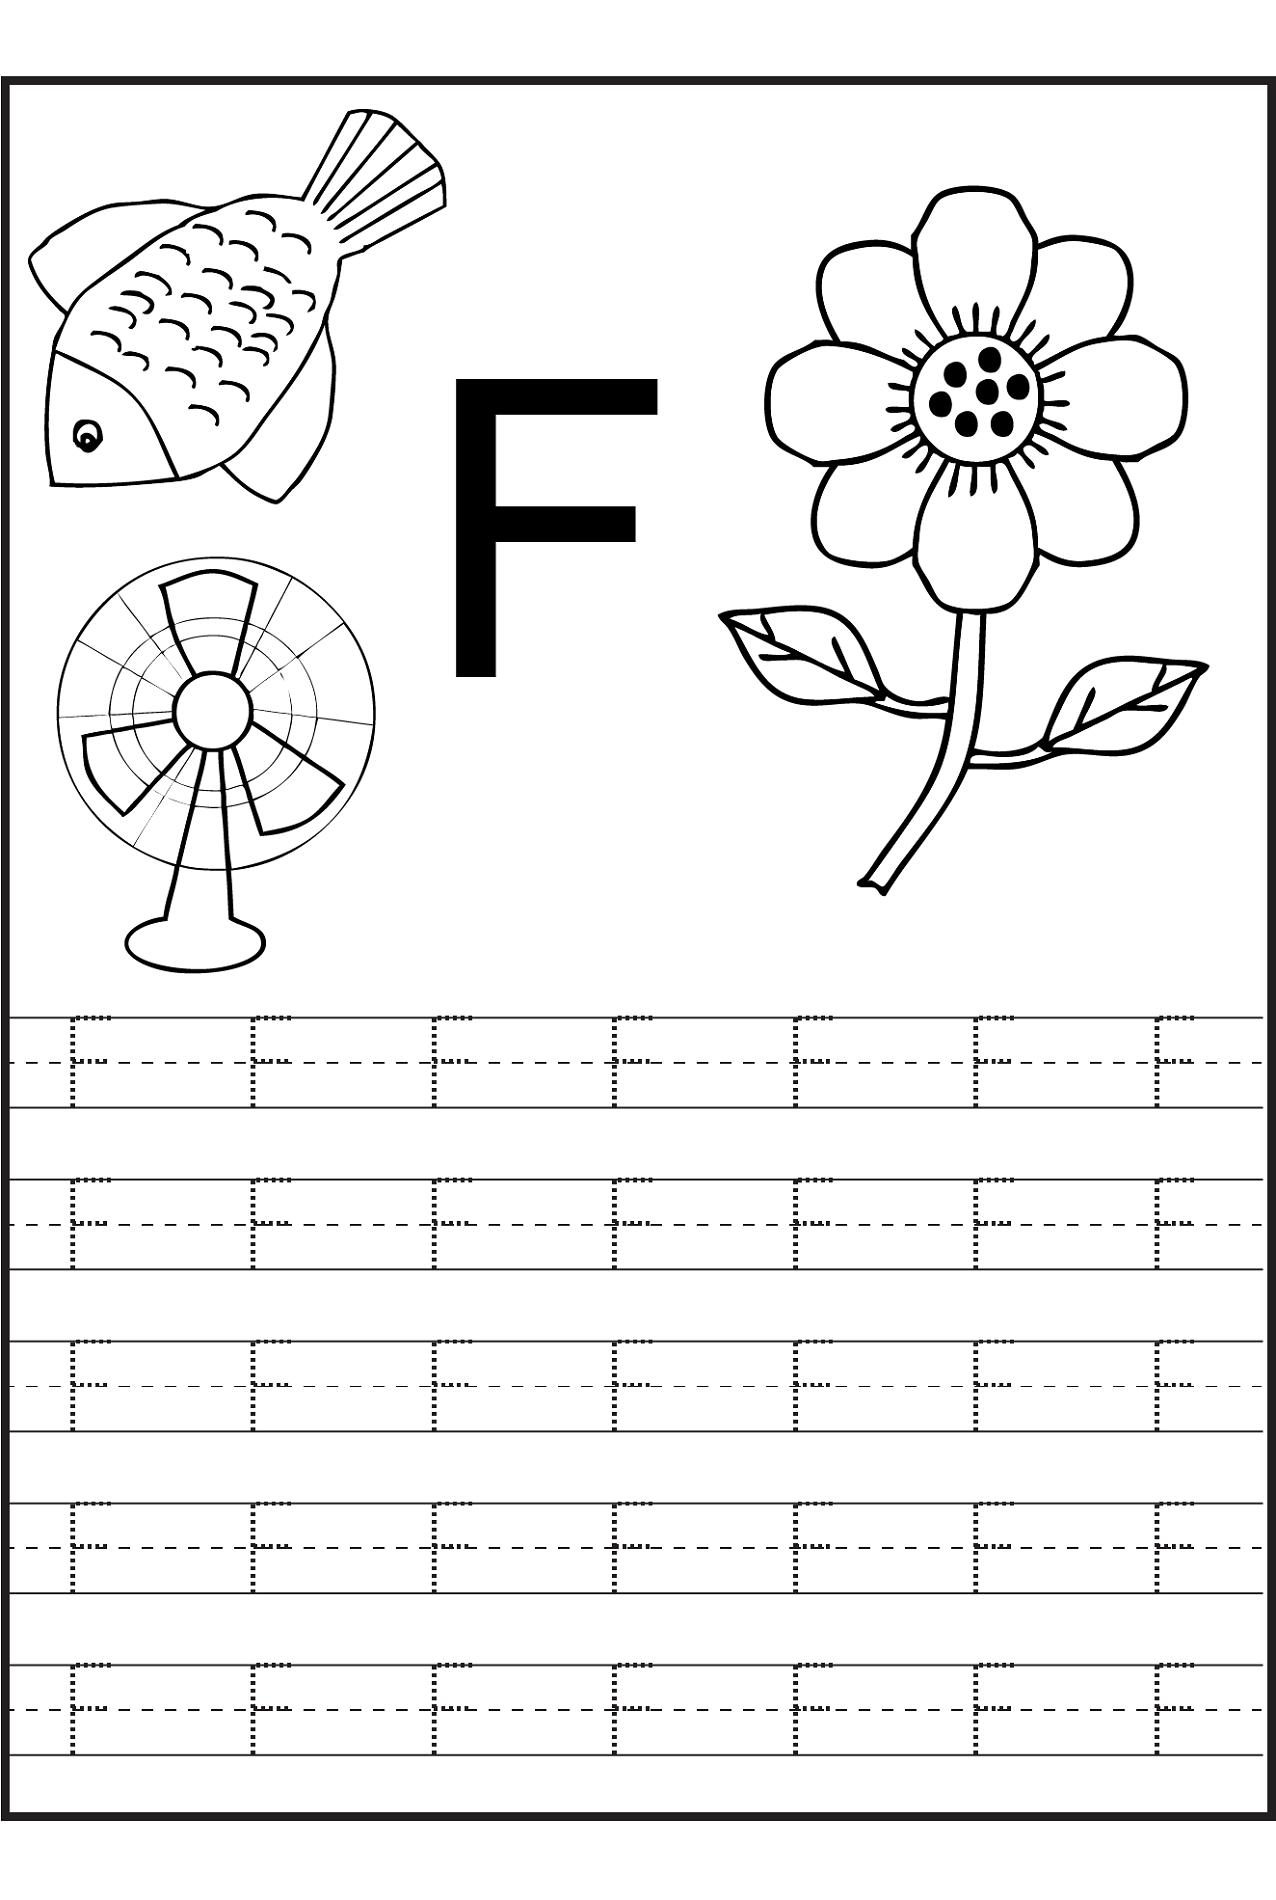 Free Printable Preschool Worksheets For Download 